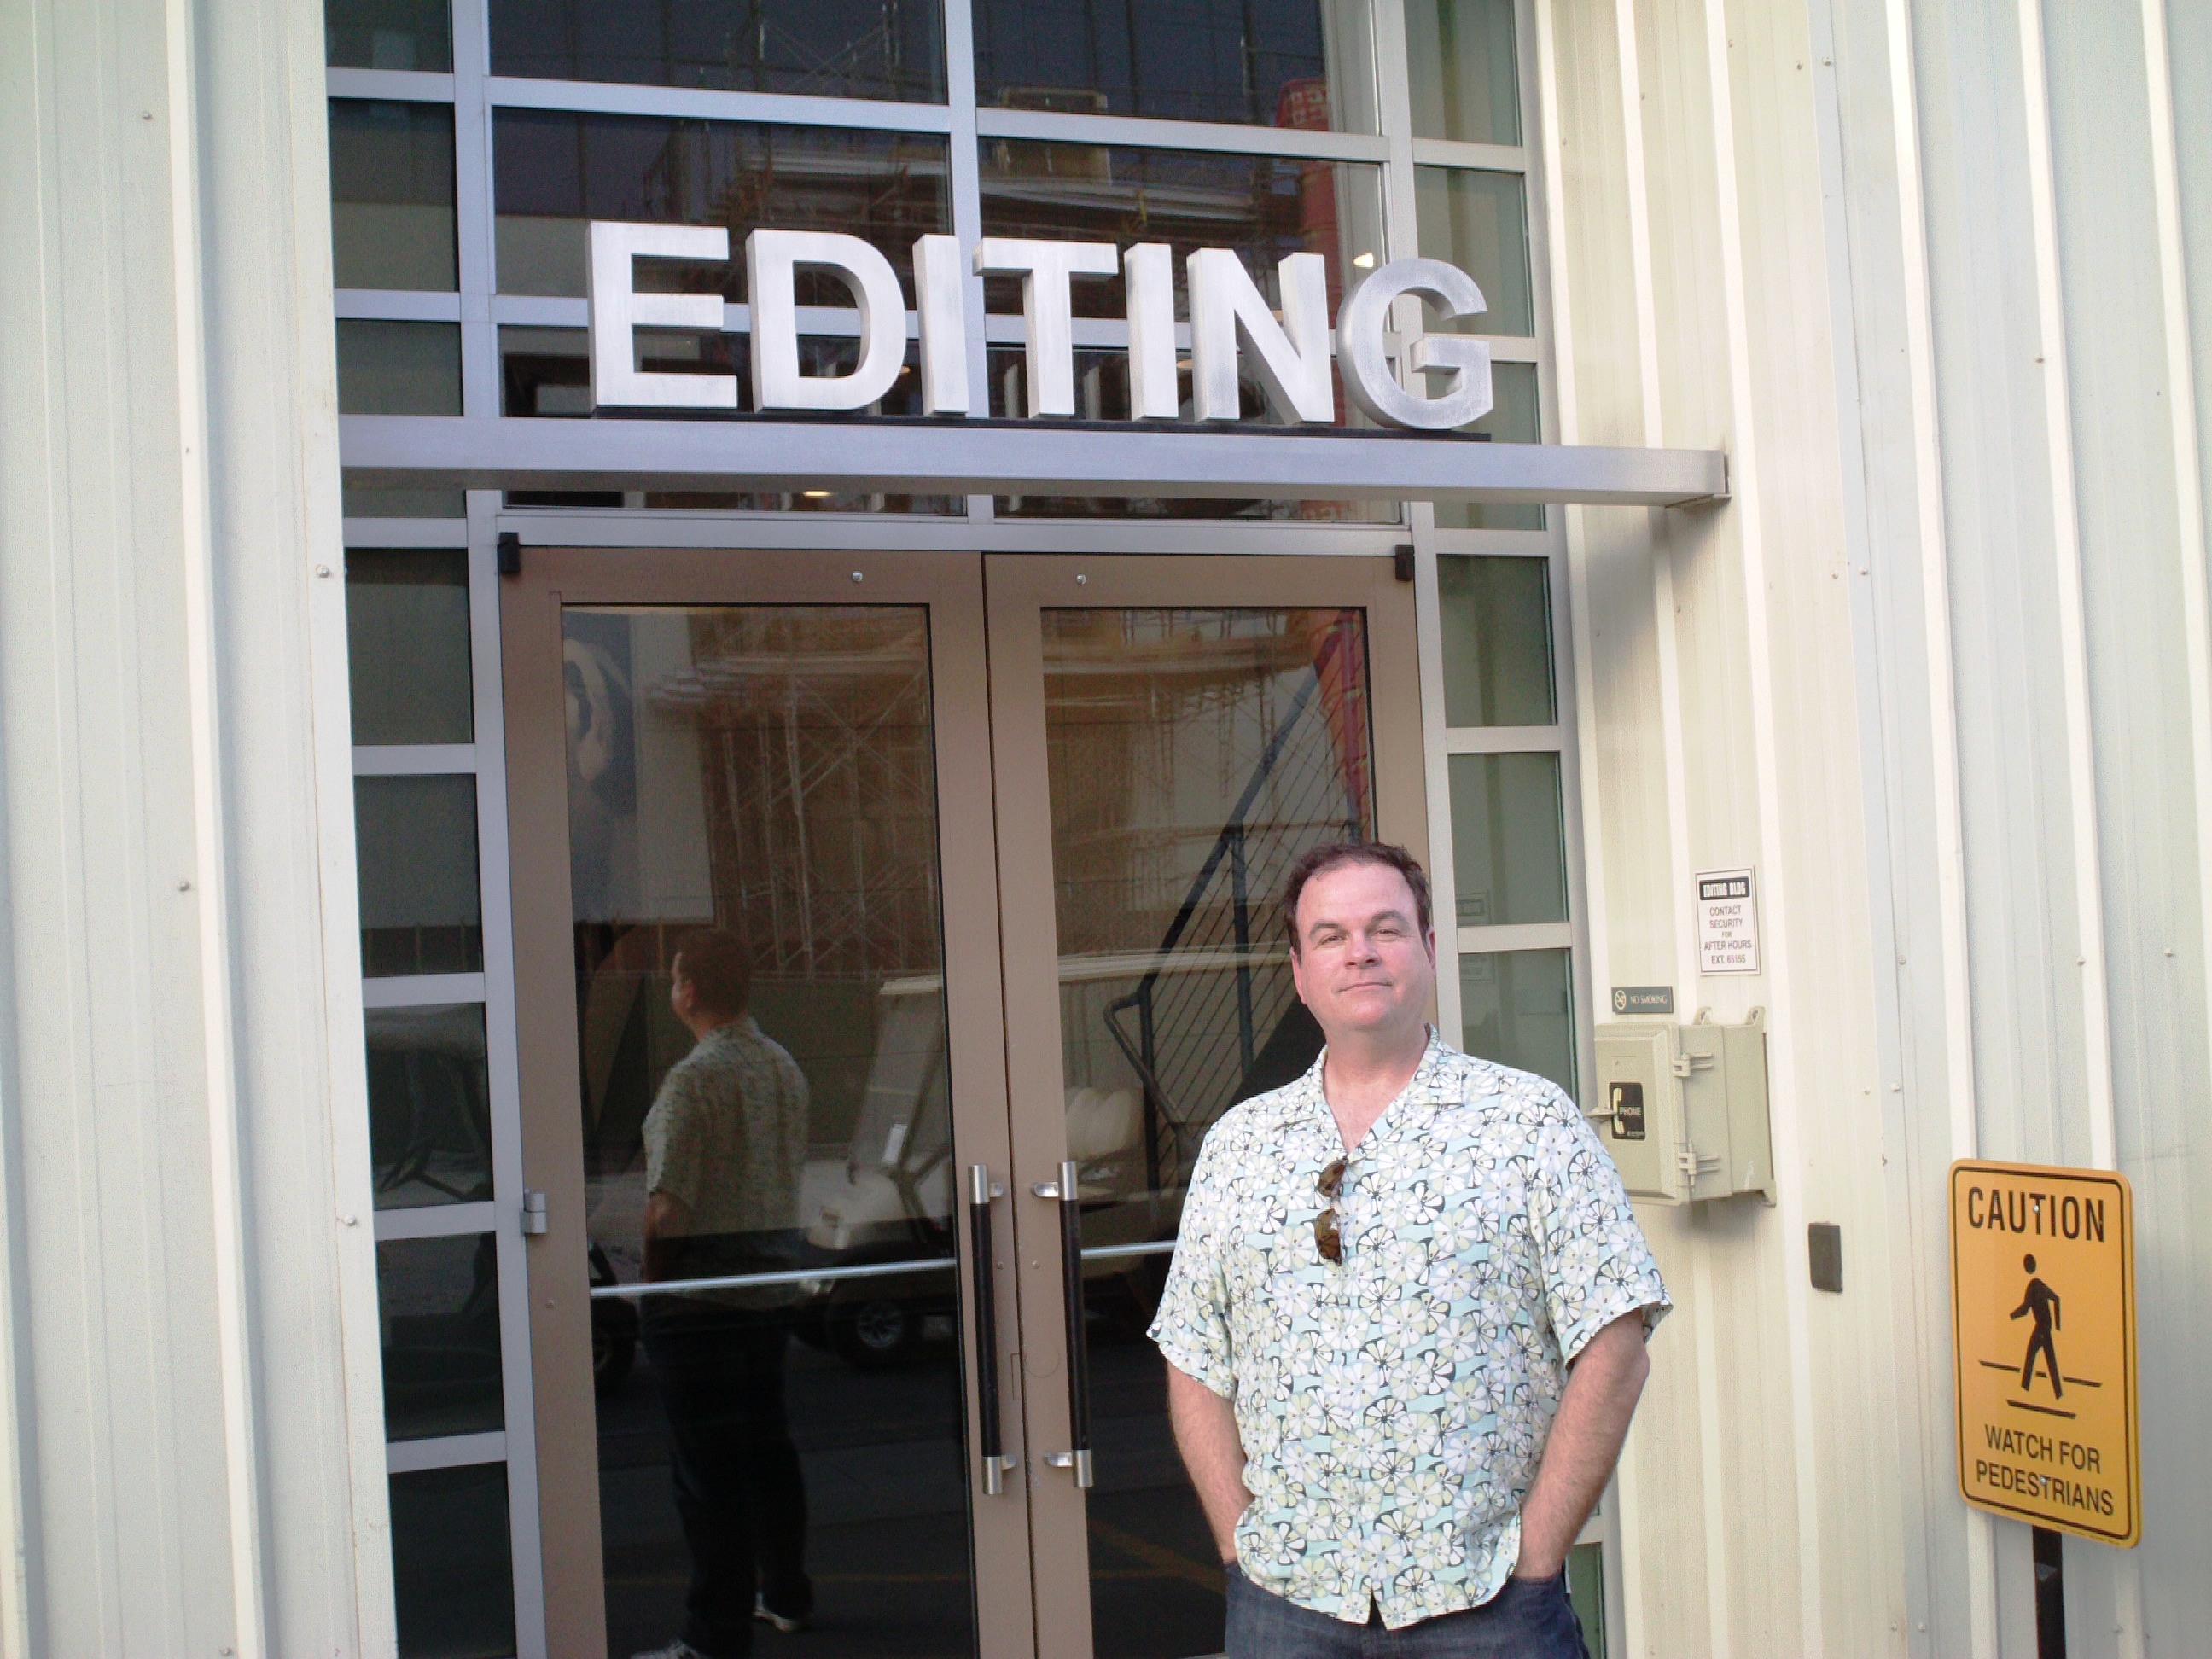 At Paramount Studios Editing Building